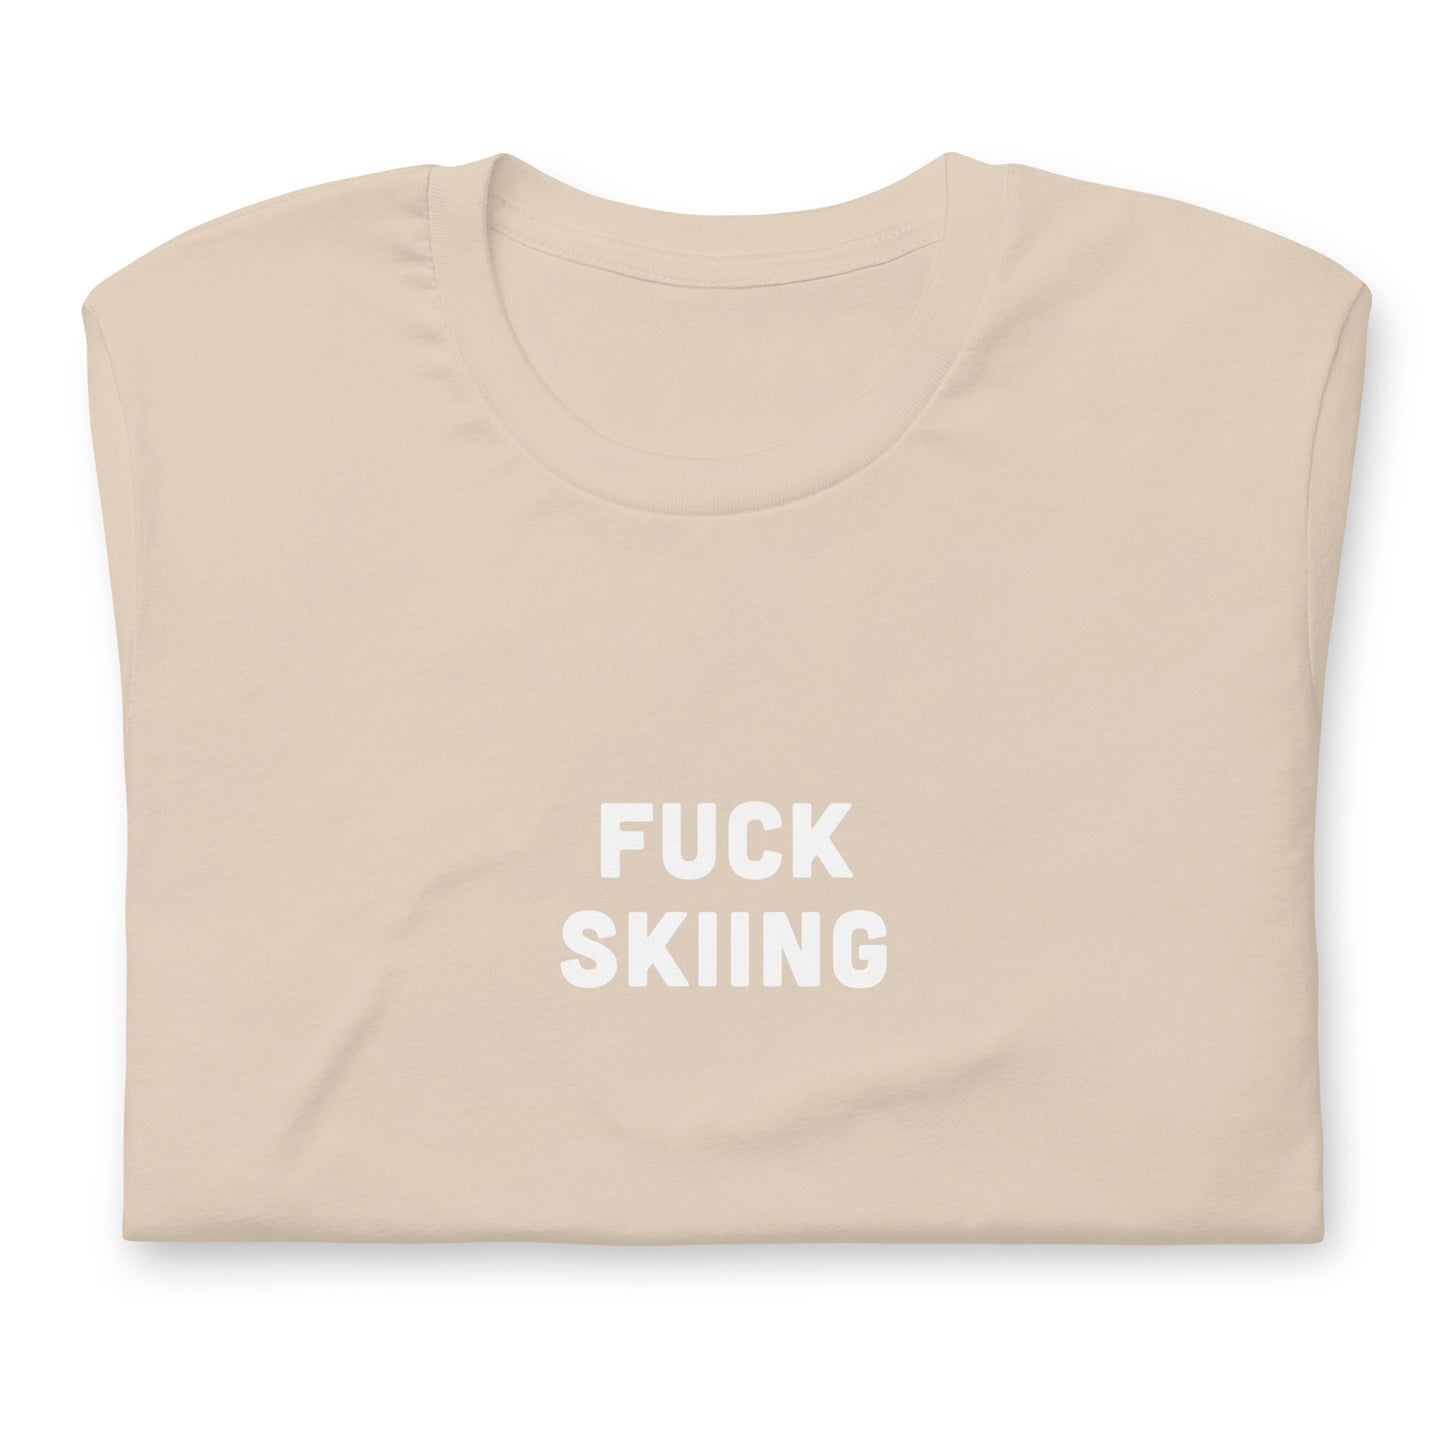 Fuck Skiing T-Shirt Size XL Color Asphalt